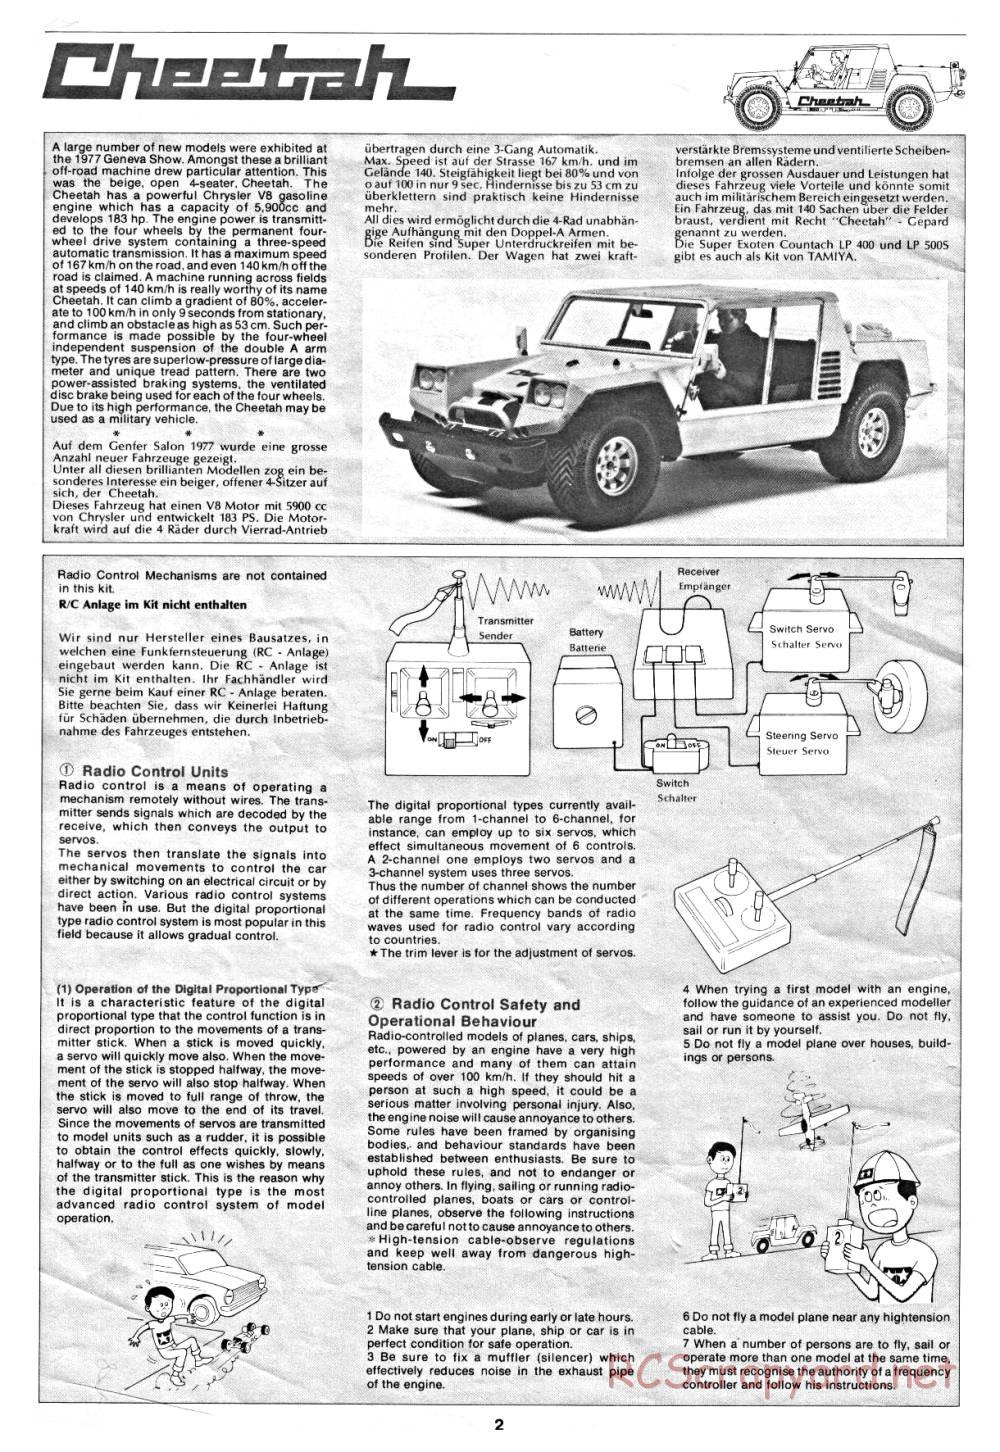 Tamiya - Lamborghini Cheetah - 58007 - Manual - Page 2